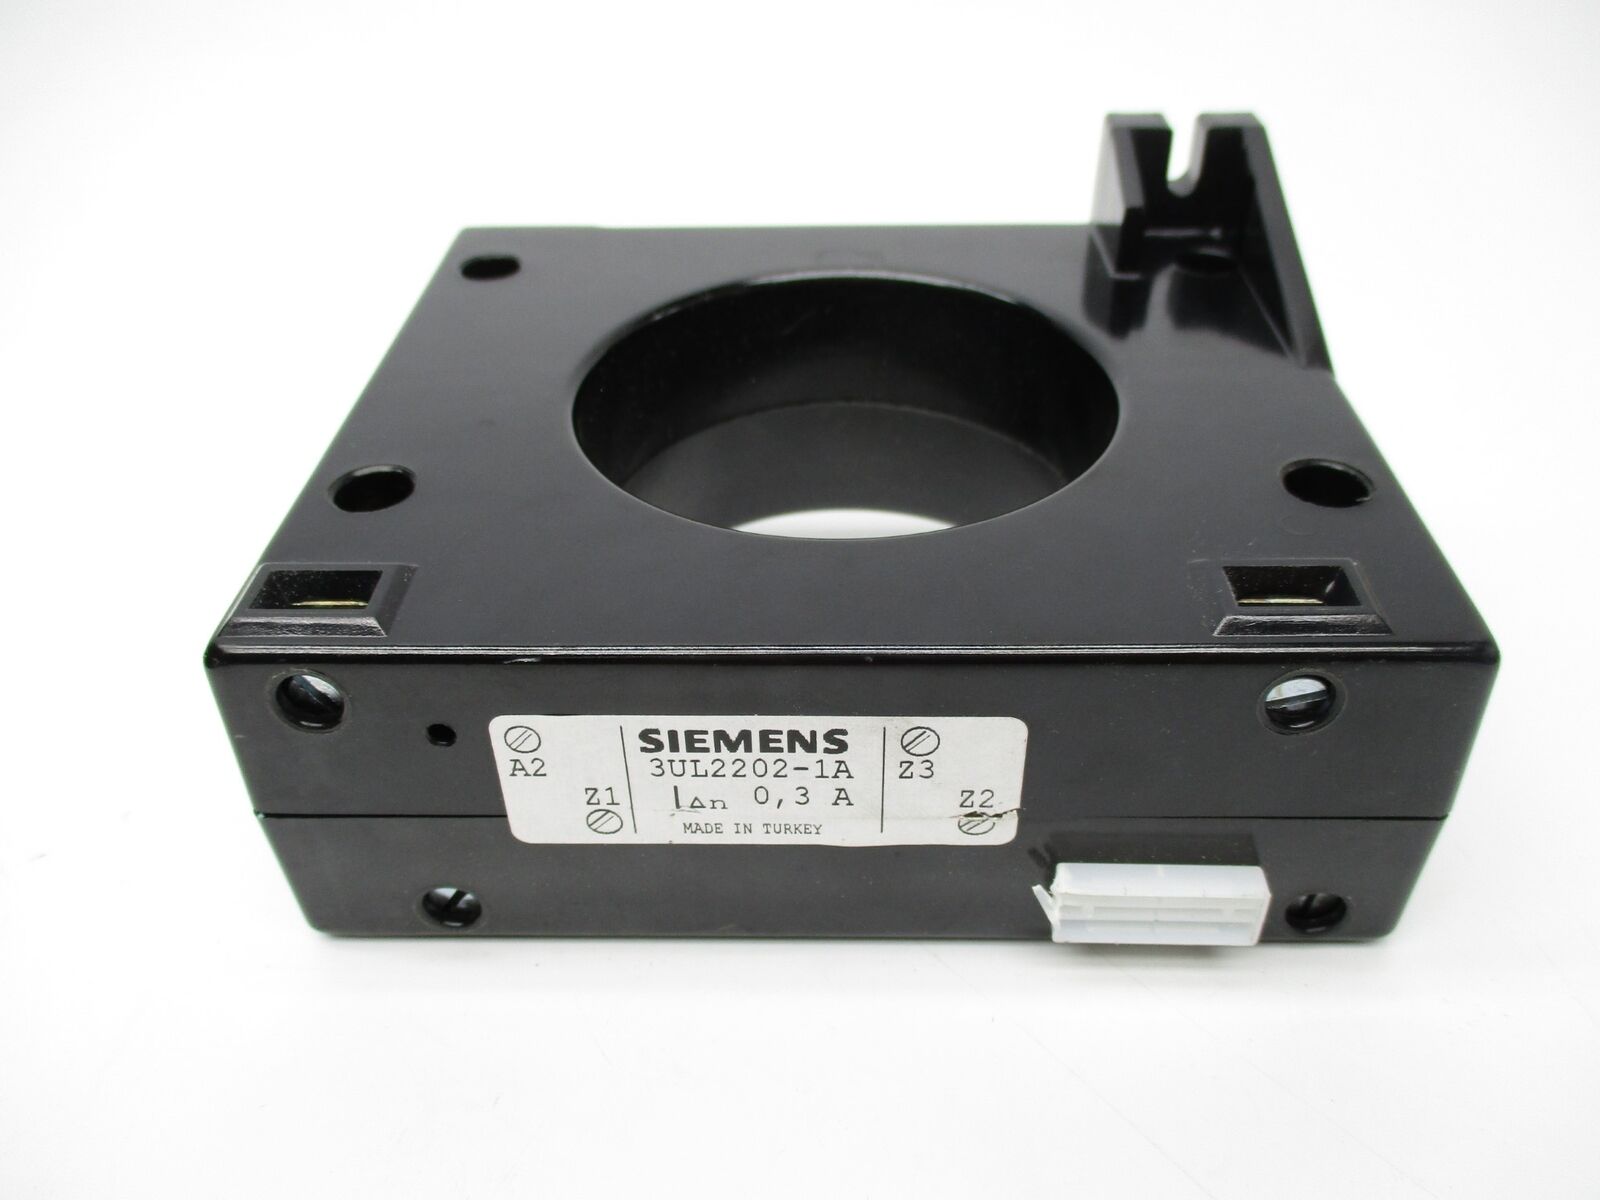 Siemens 3UL2202-1A 0,3A